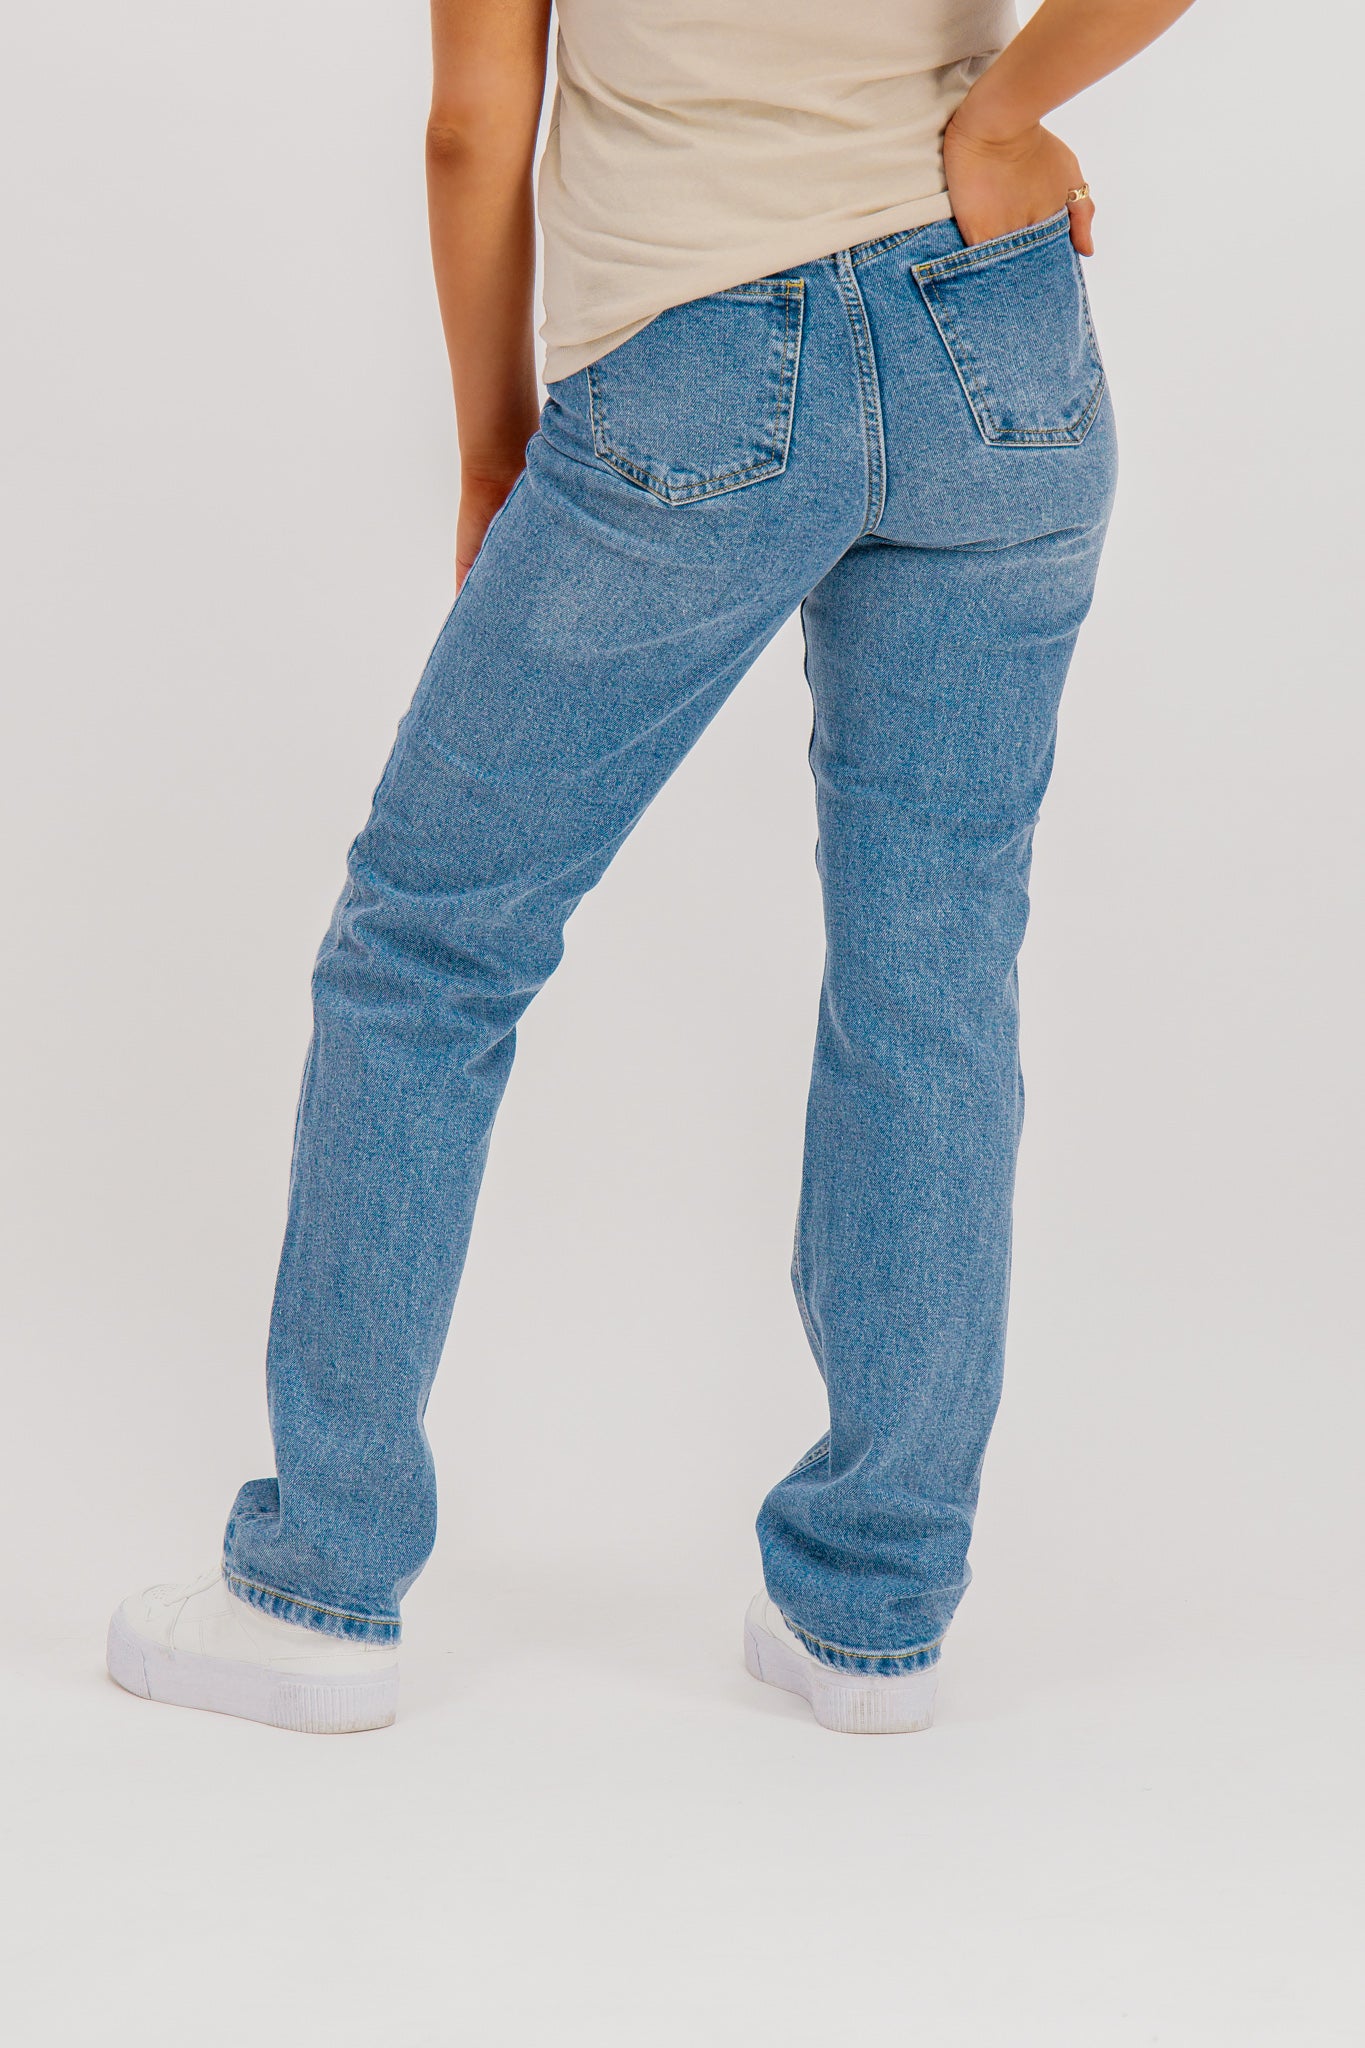 Drew High Rise Straight Light Blue Denim Jeans